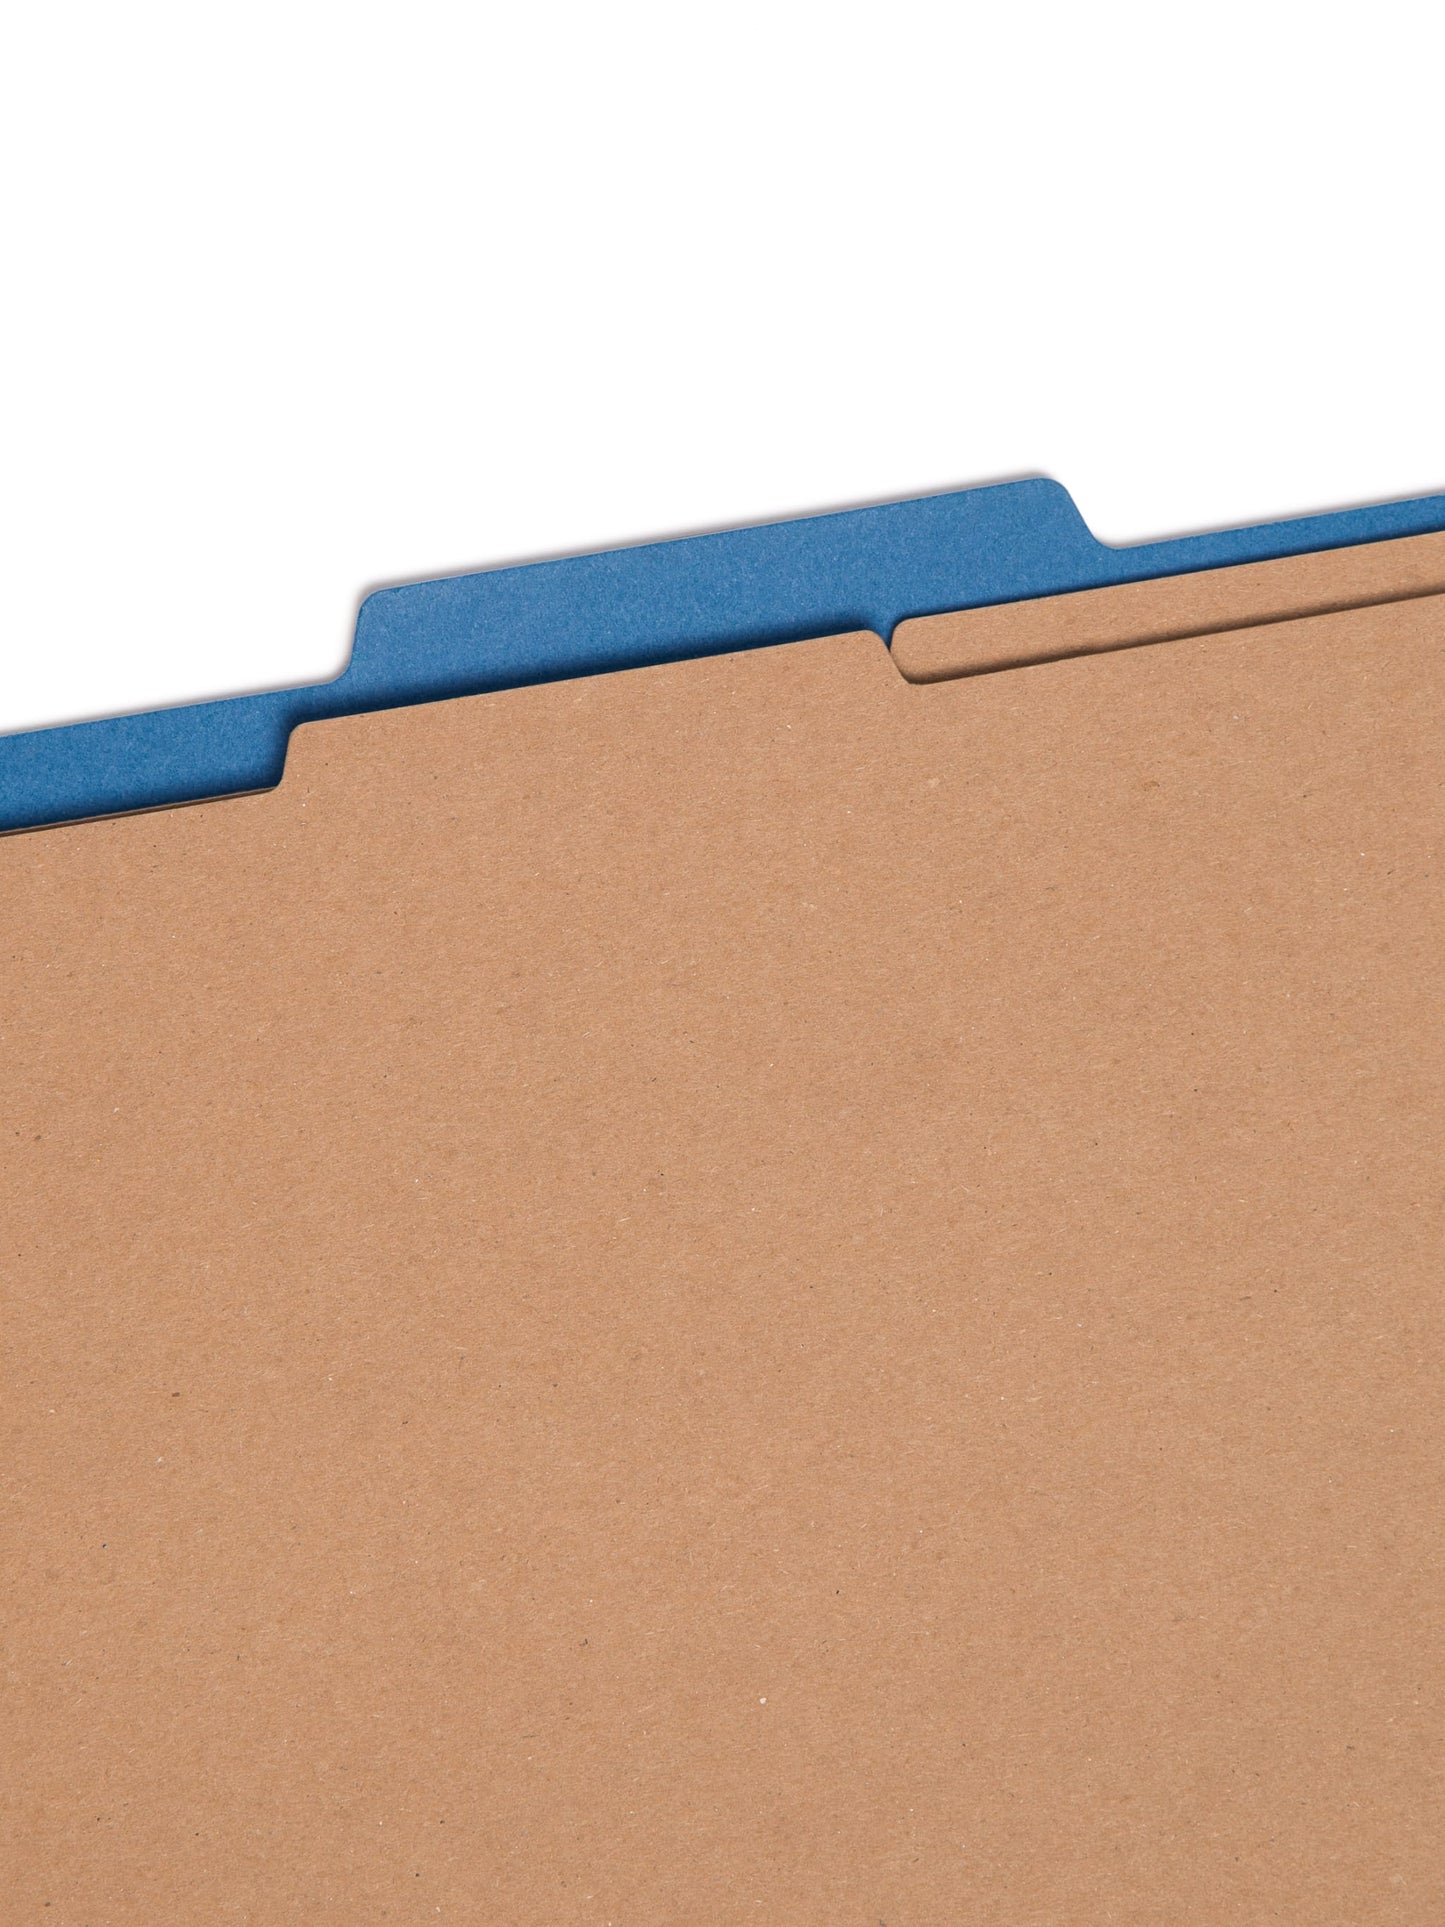 SafeSHIELD® Pressboard Classification File Folders, 2 Dividers, 2 inch Expansion, 2/5-Cut Tab, Dark Blue Color, Legal Size, Set of 0, 30086486190351